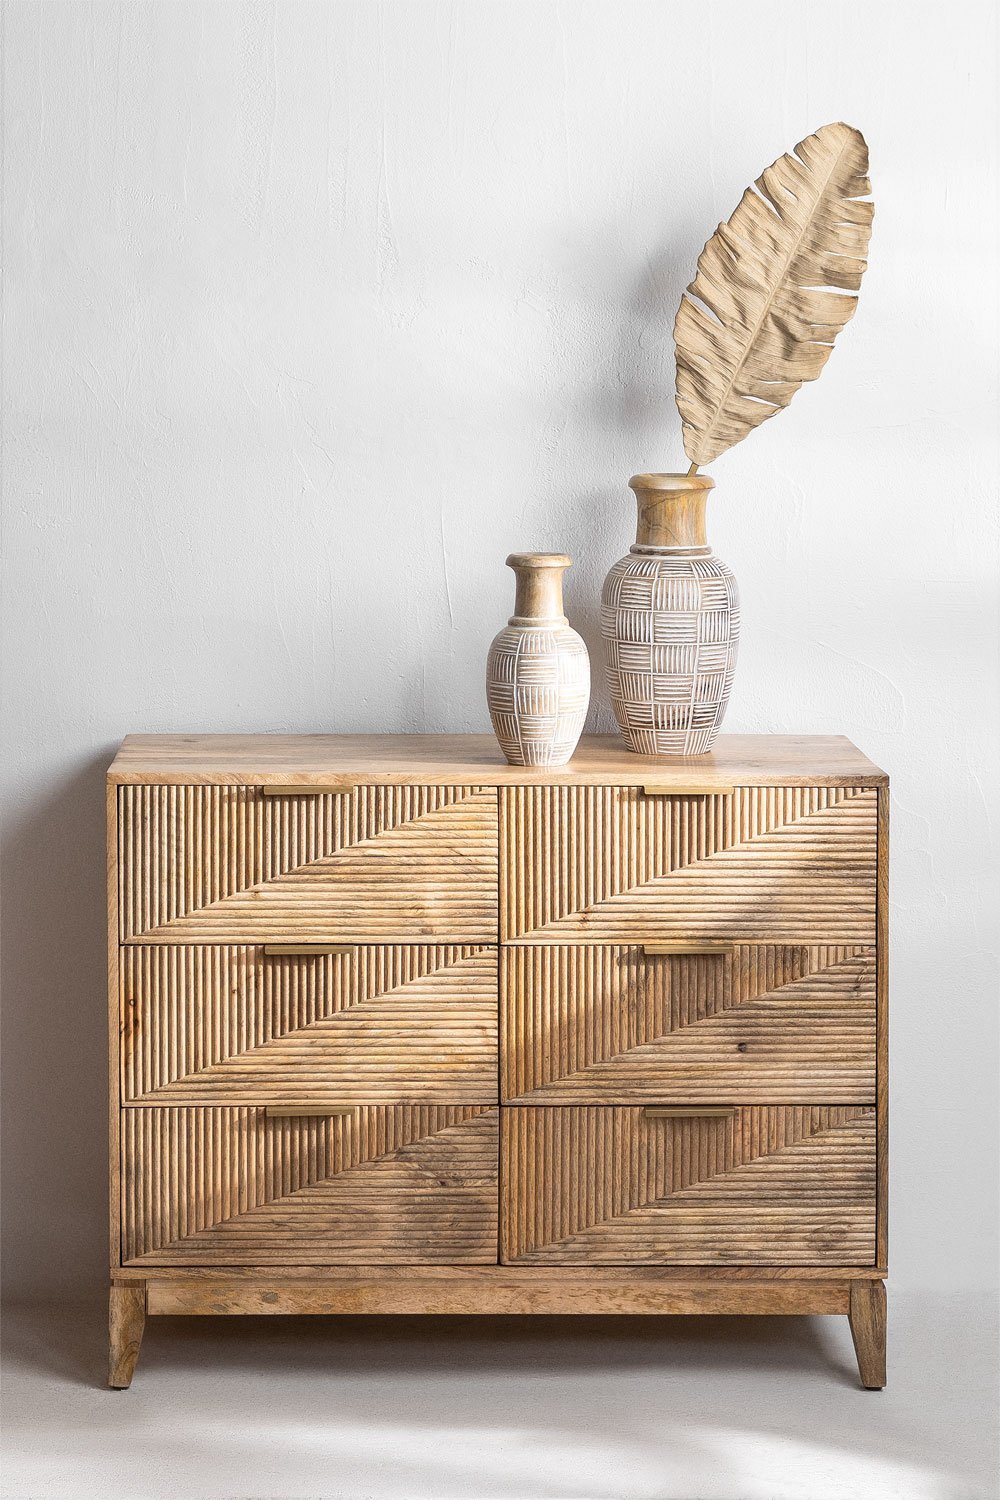 Mango Wood Dresser Baty Design, gallery image 1